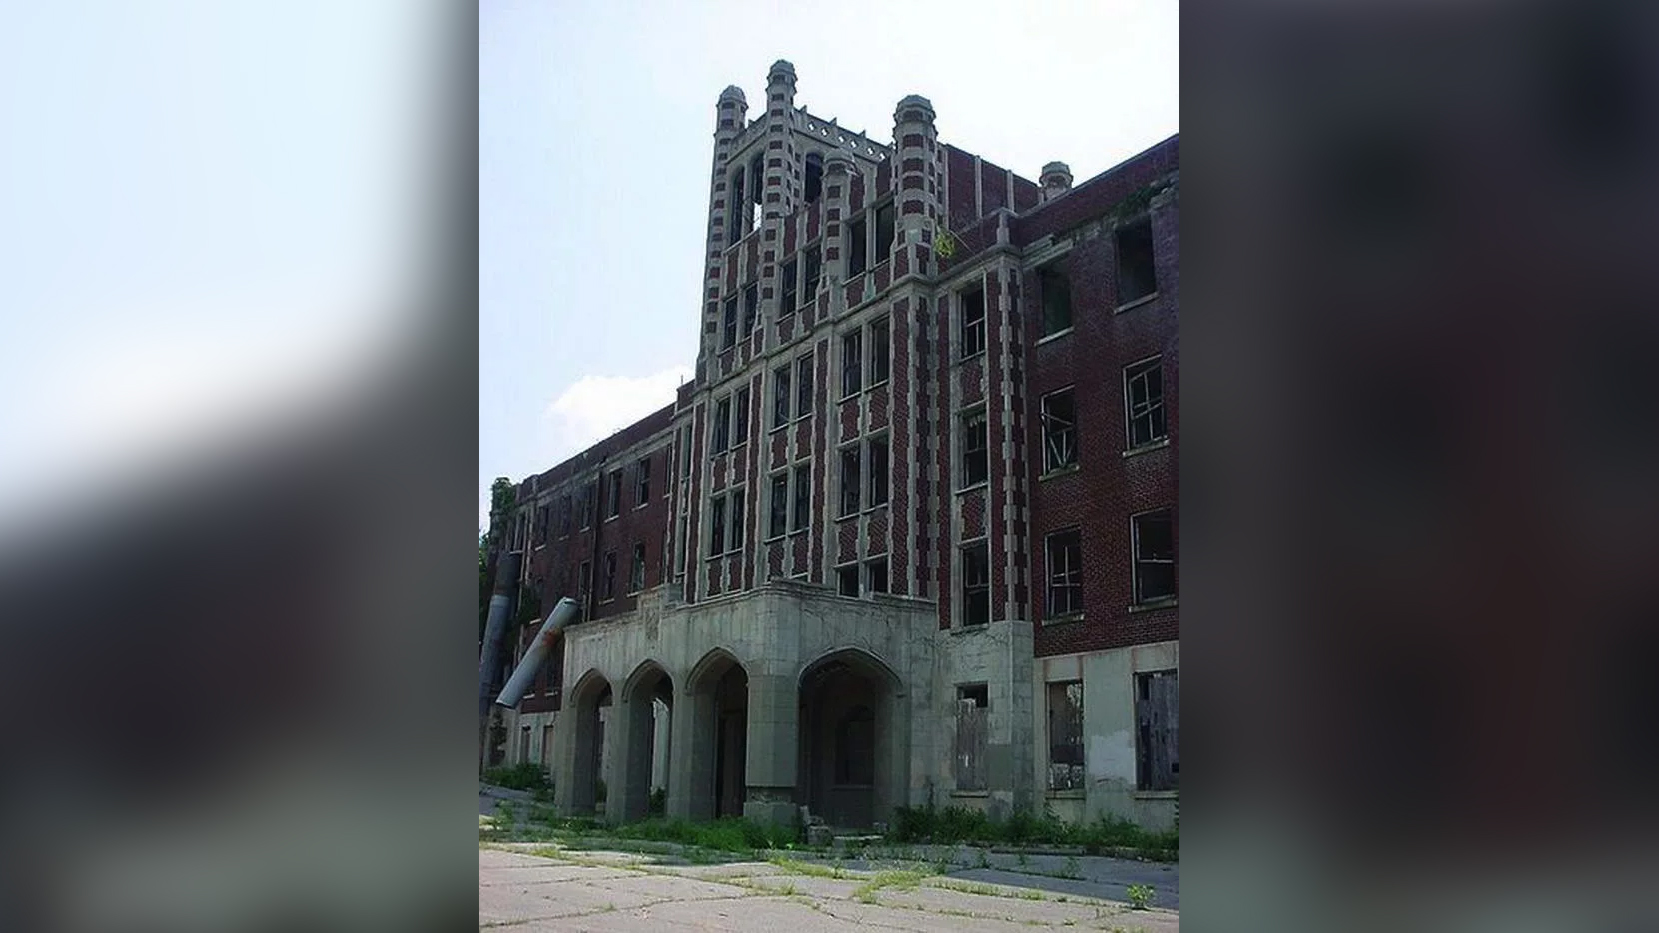 The Waverly Hills Sanatorium was built in 1910 on the edge of Louisville, Kentucky.